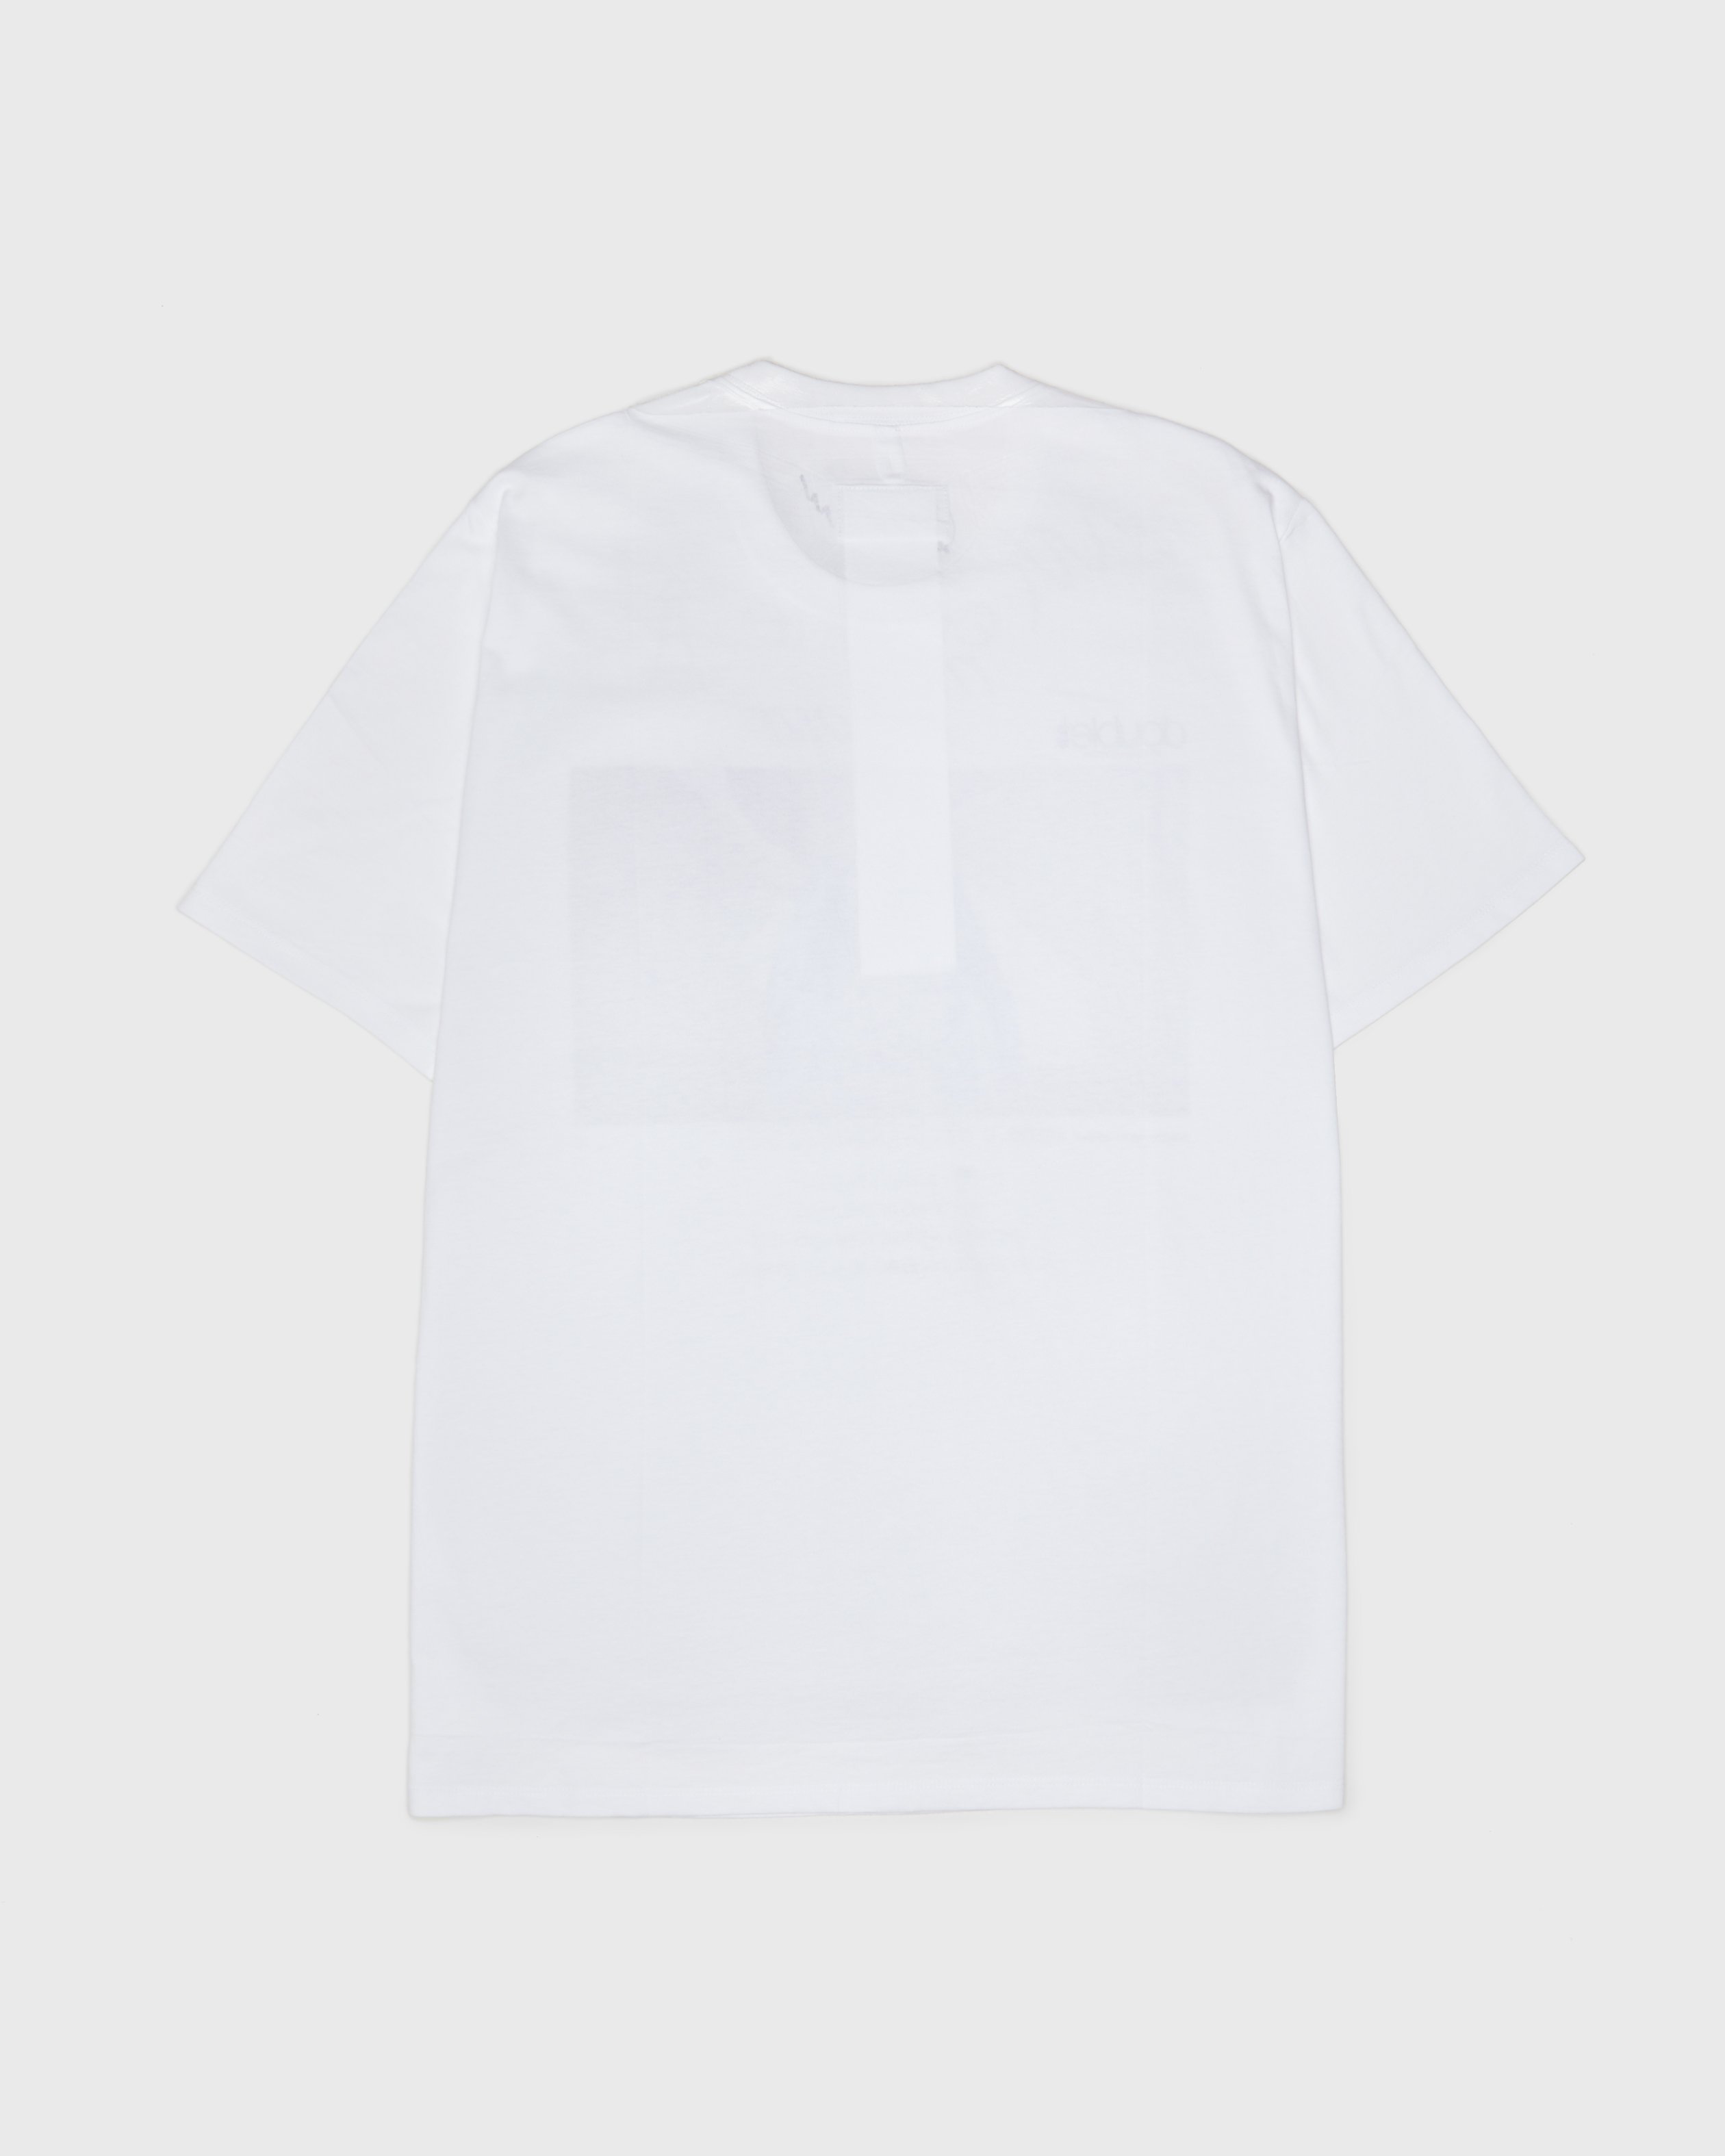 Colette Mon Amour - Doublet T-Shirt - Clothing - White - Image 2